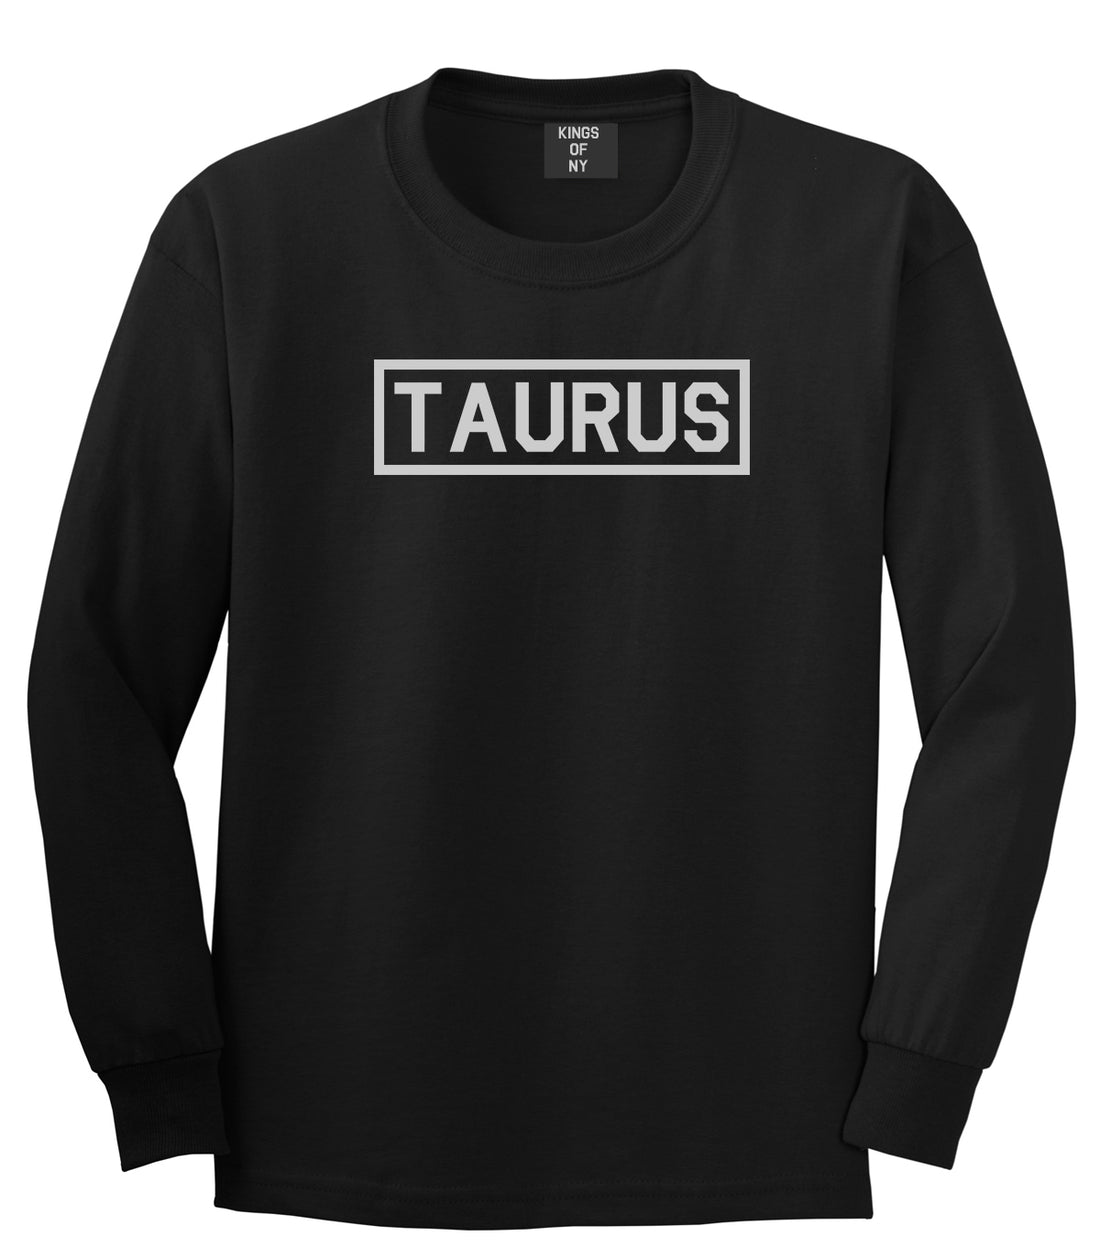 Taurus Horoscope Sign Mens Black Long Sleeve T-Shirt by KINGS OF NY